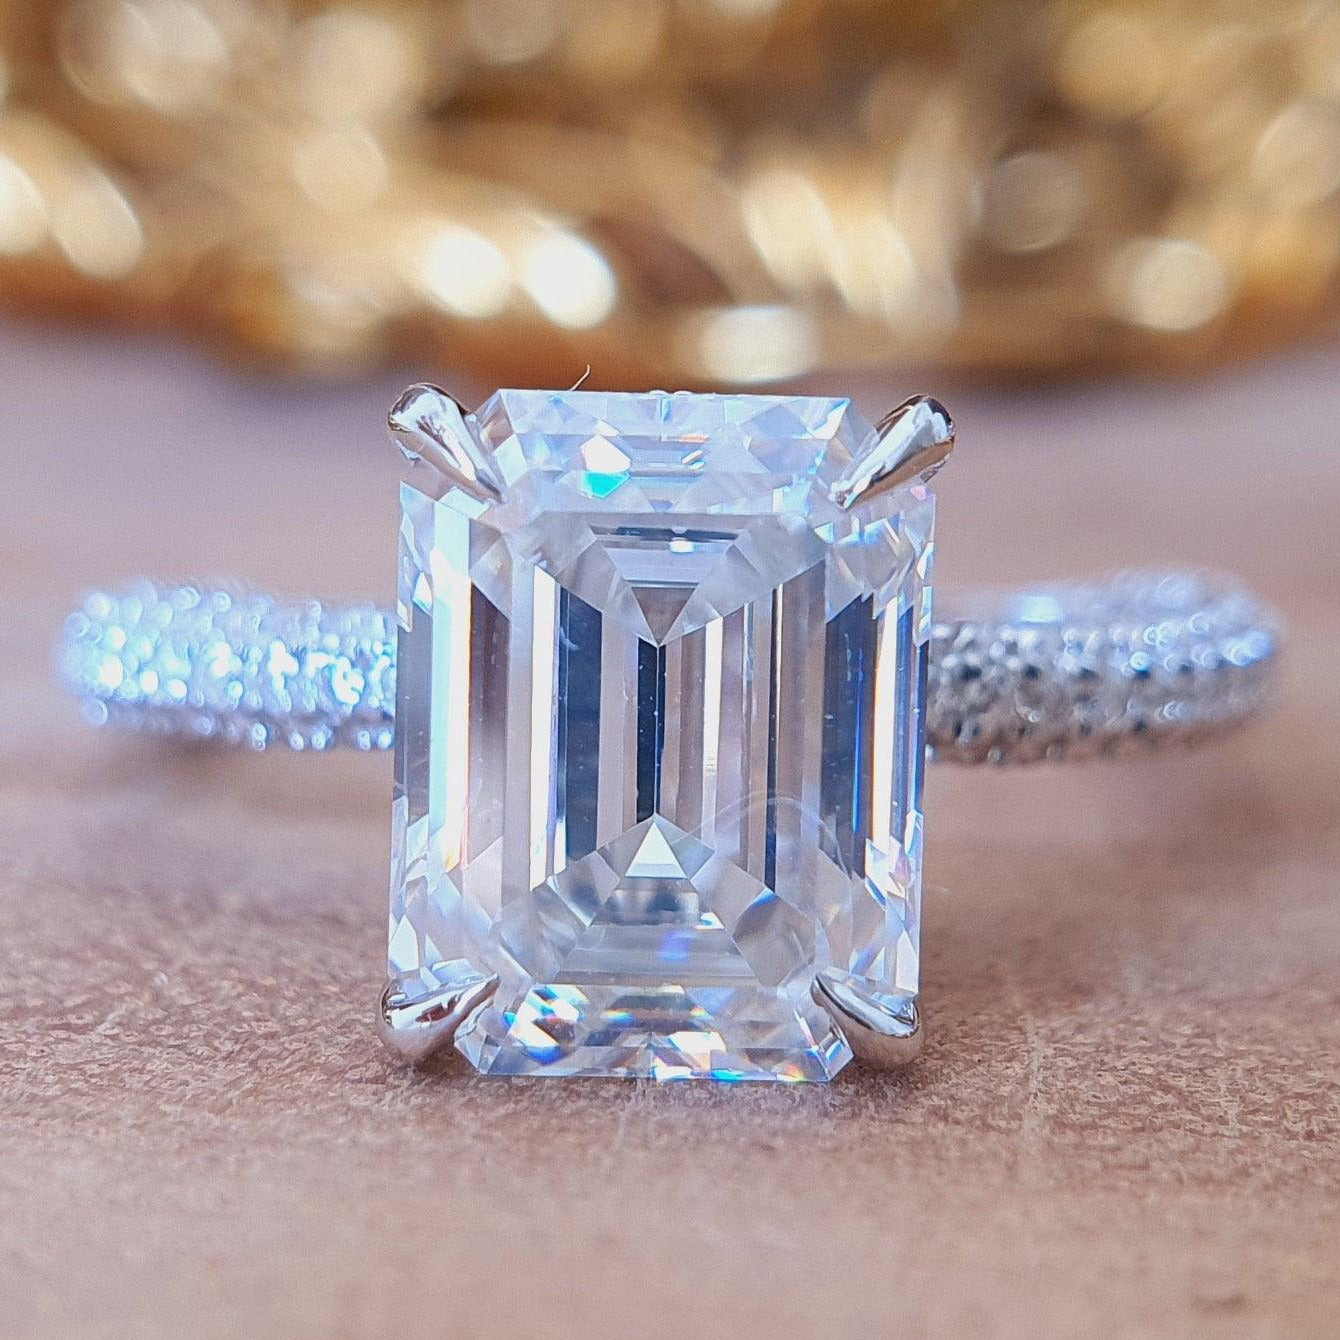 Hidden Halo Emerald Cut Moissanite Engagement Ring - Eurekalook